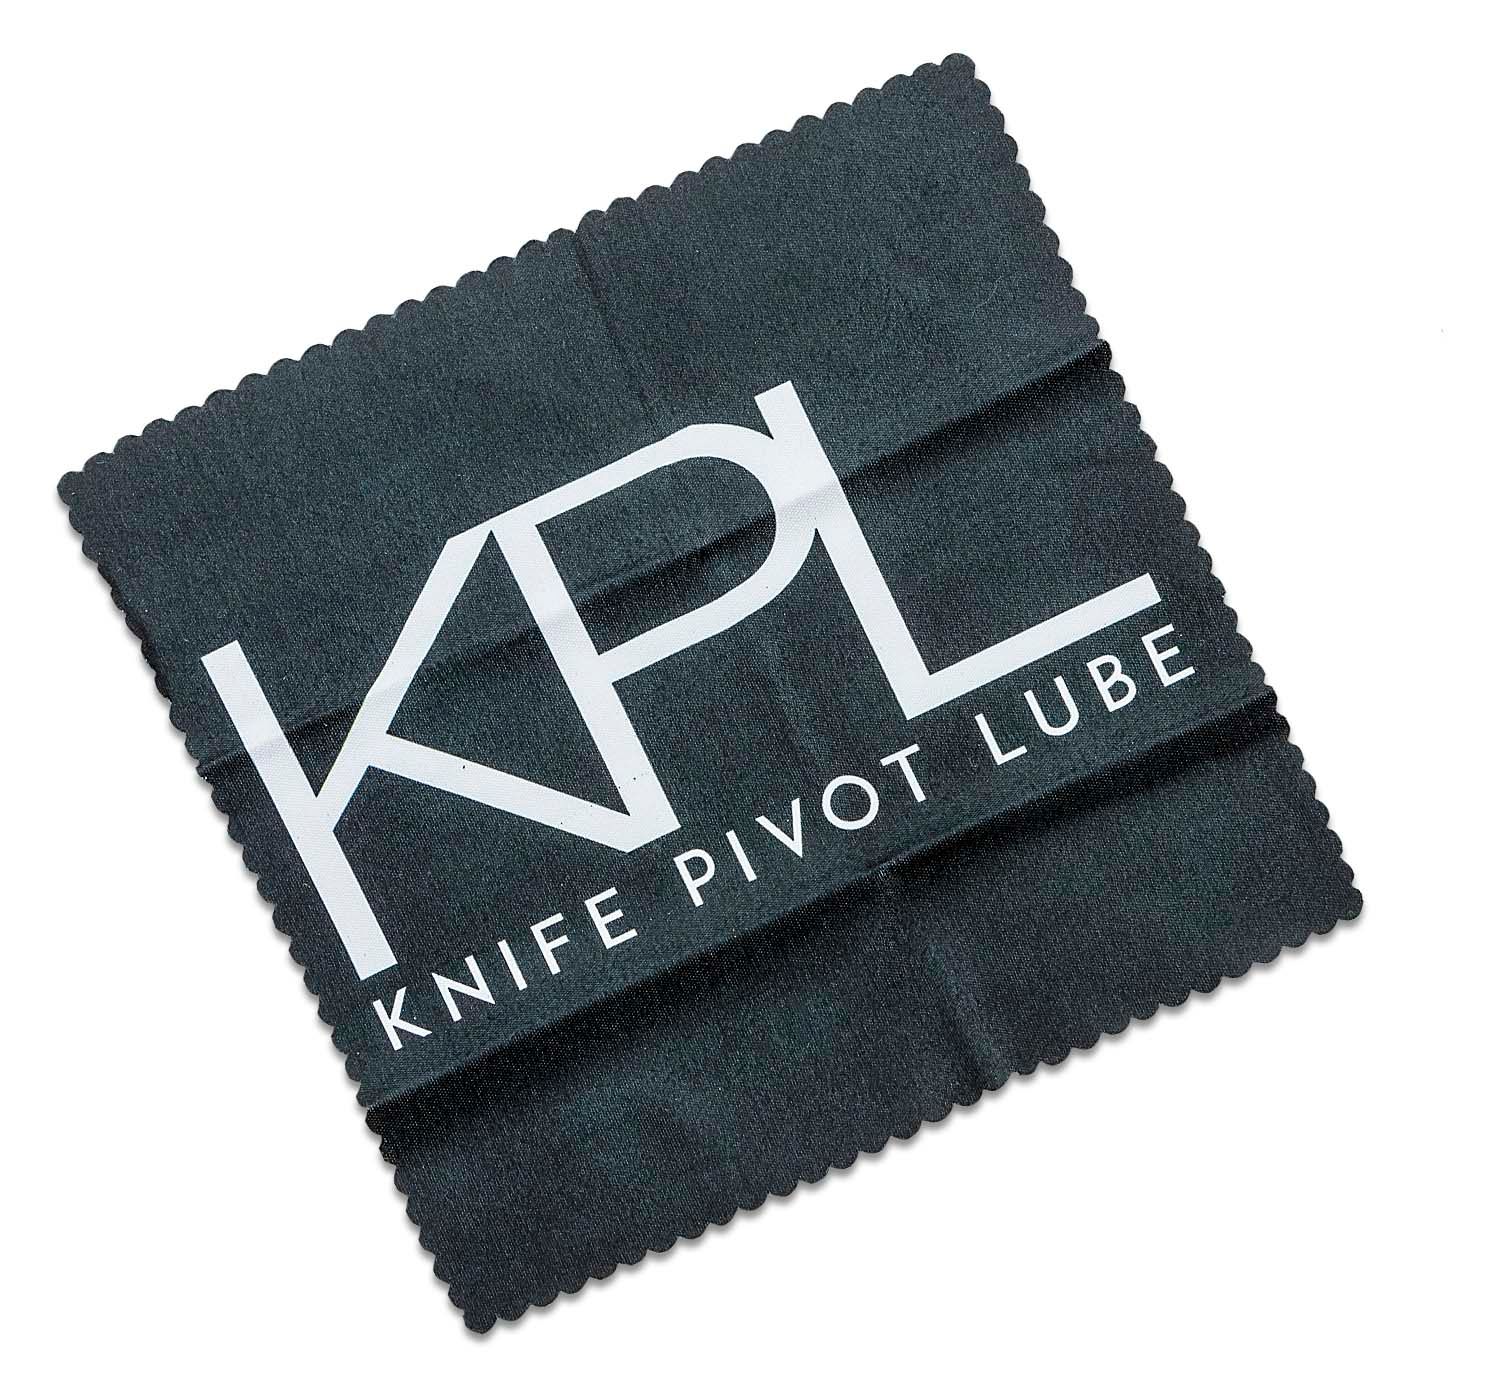 Knife Pivot Lube ( KPL) 10ml - Way Of Knife & EDC Gear House